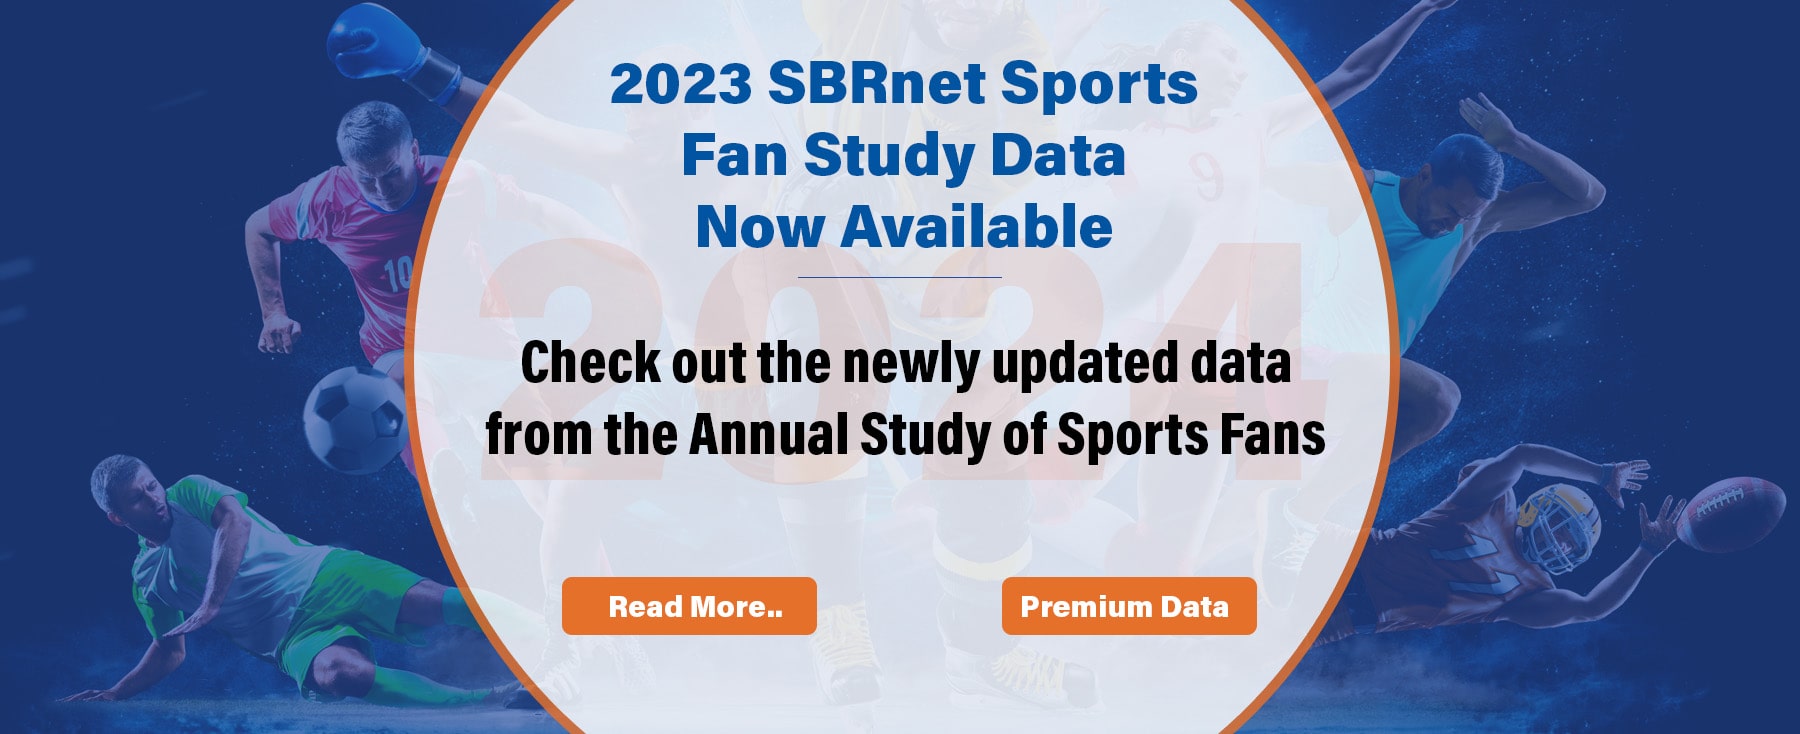 2023 SBRnet Sports Fan Study Data Now Available